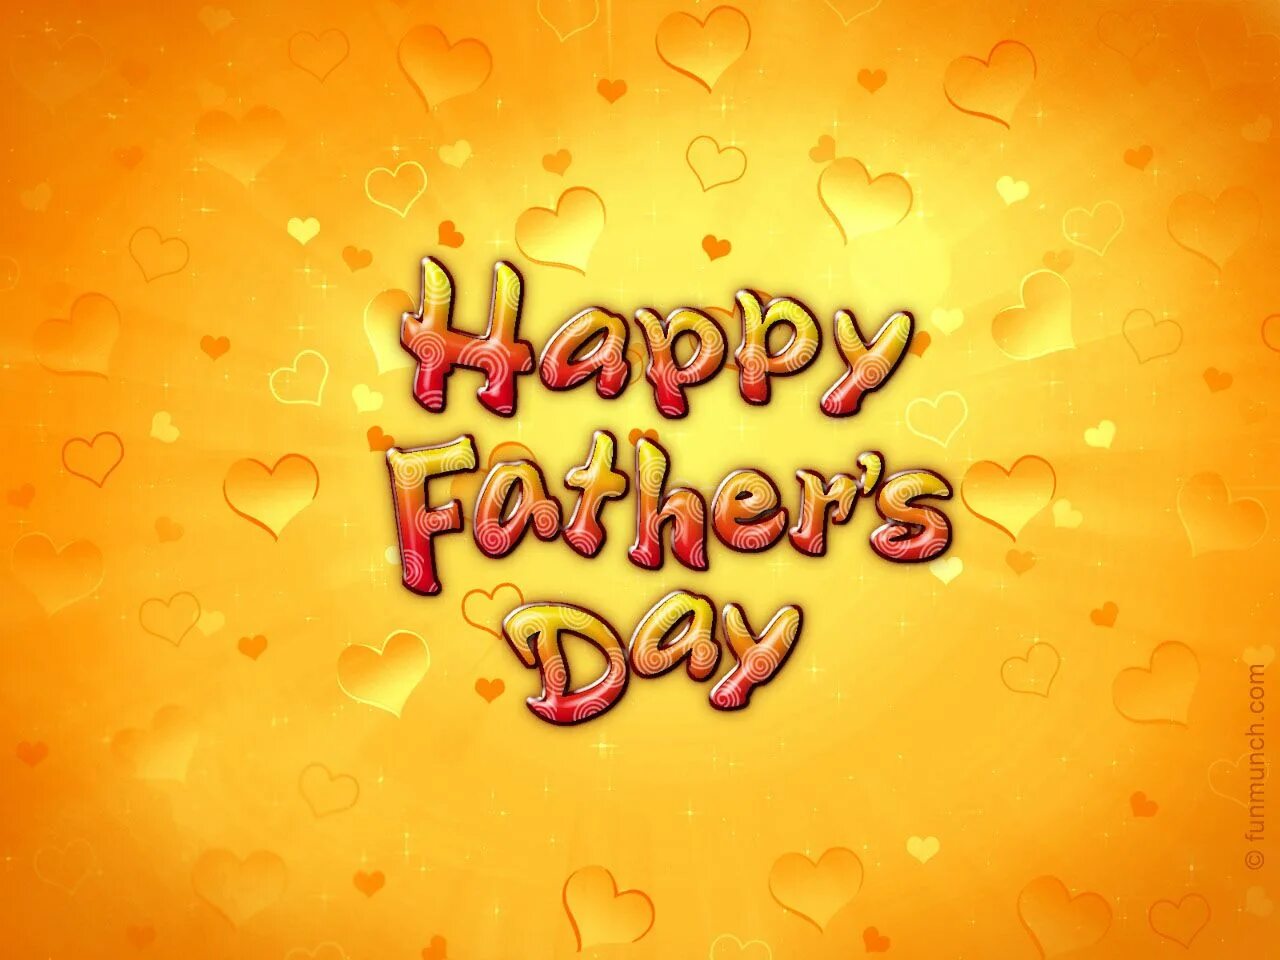 Fathers day. С днем отца. Happy fathers Day открытка. День отца открытки поздравления. Открытки с днем отца на английском языке.